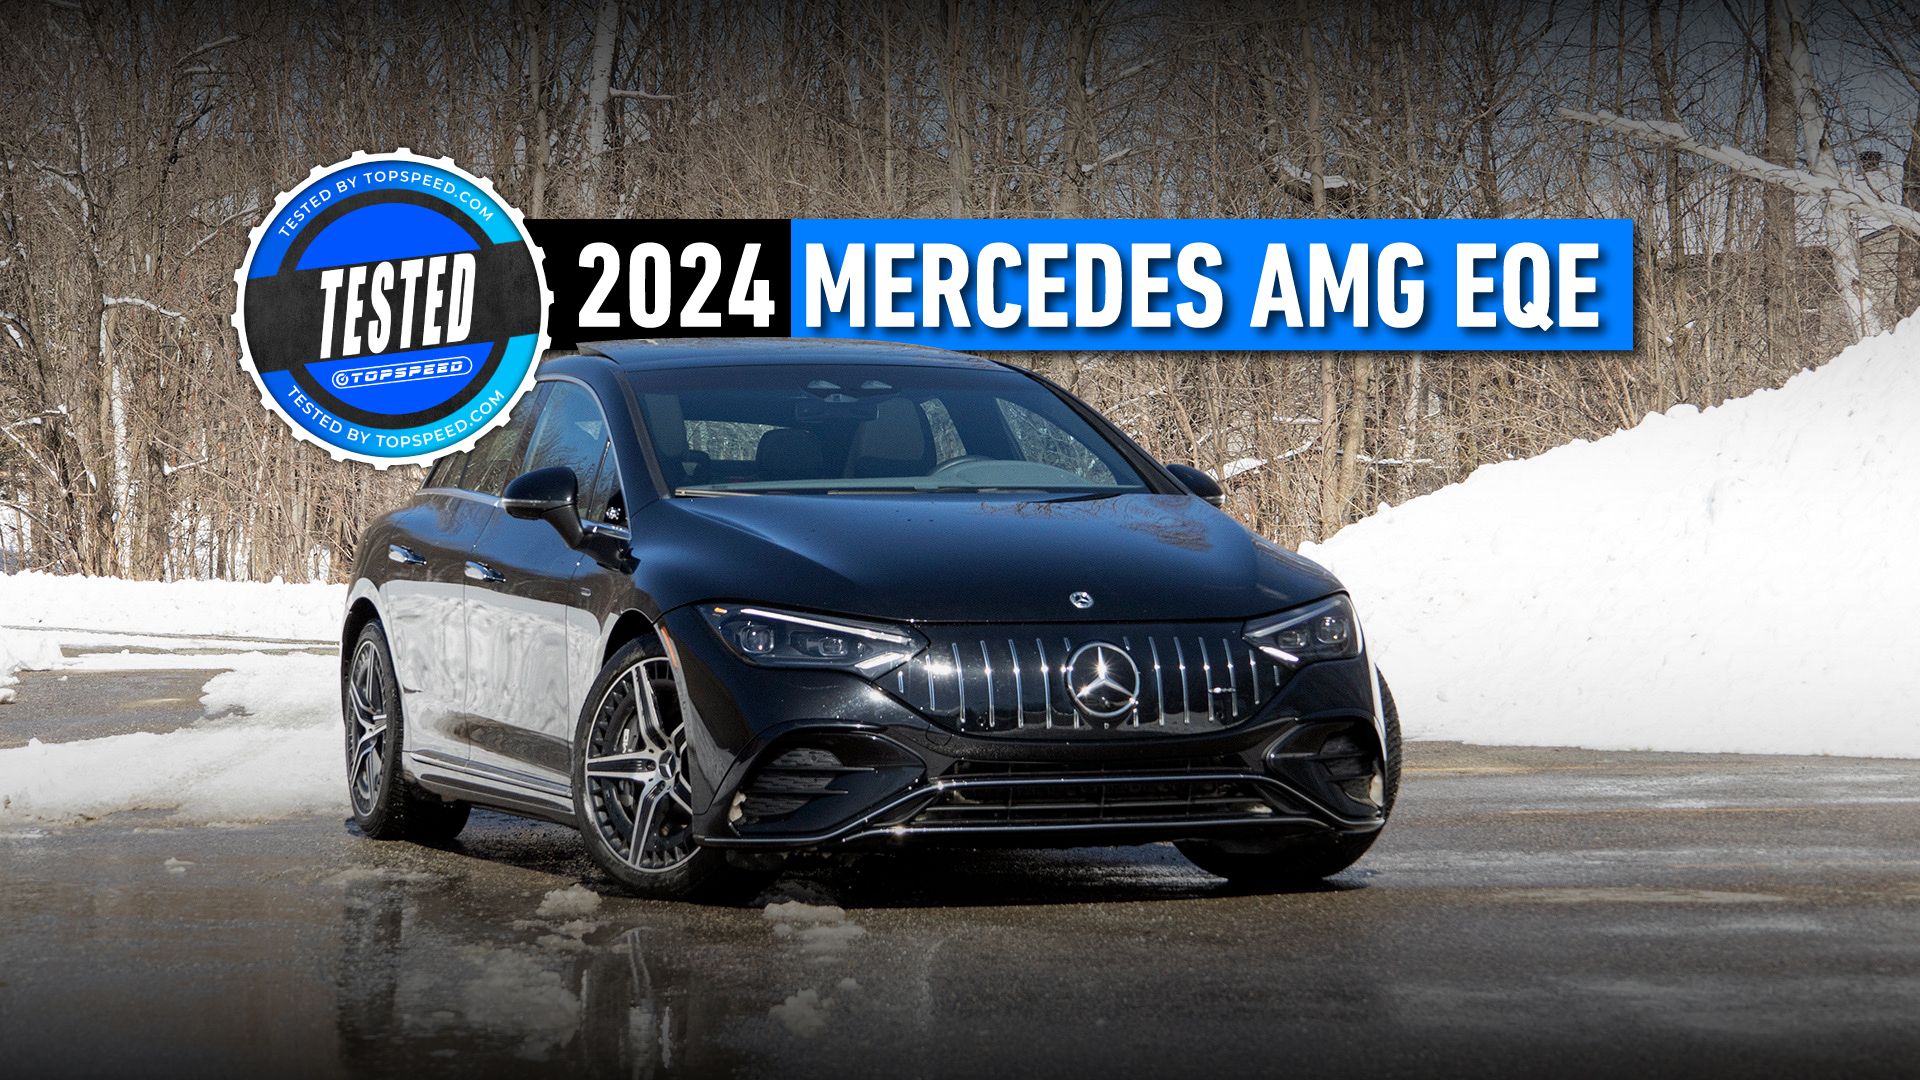 2024-Mercedes-AMG-eqe